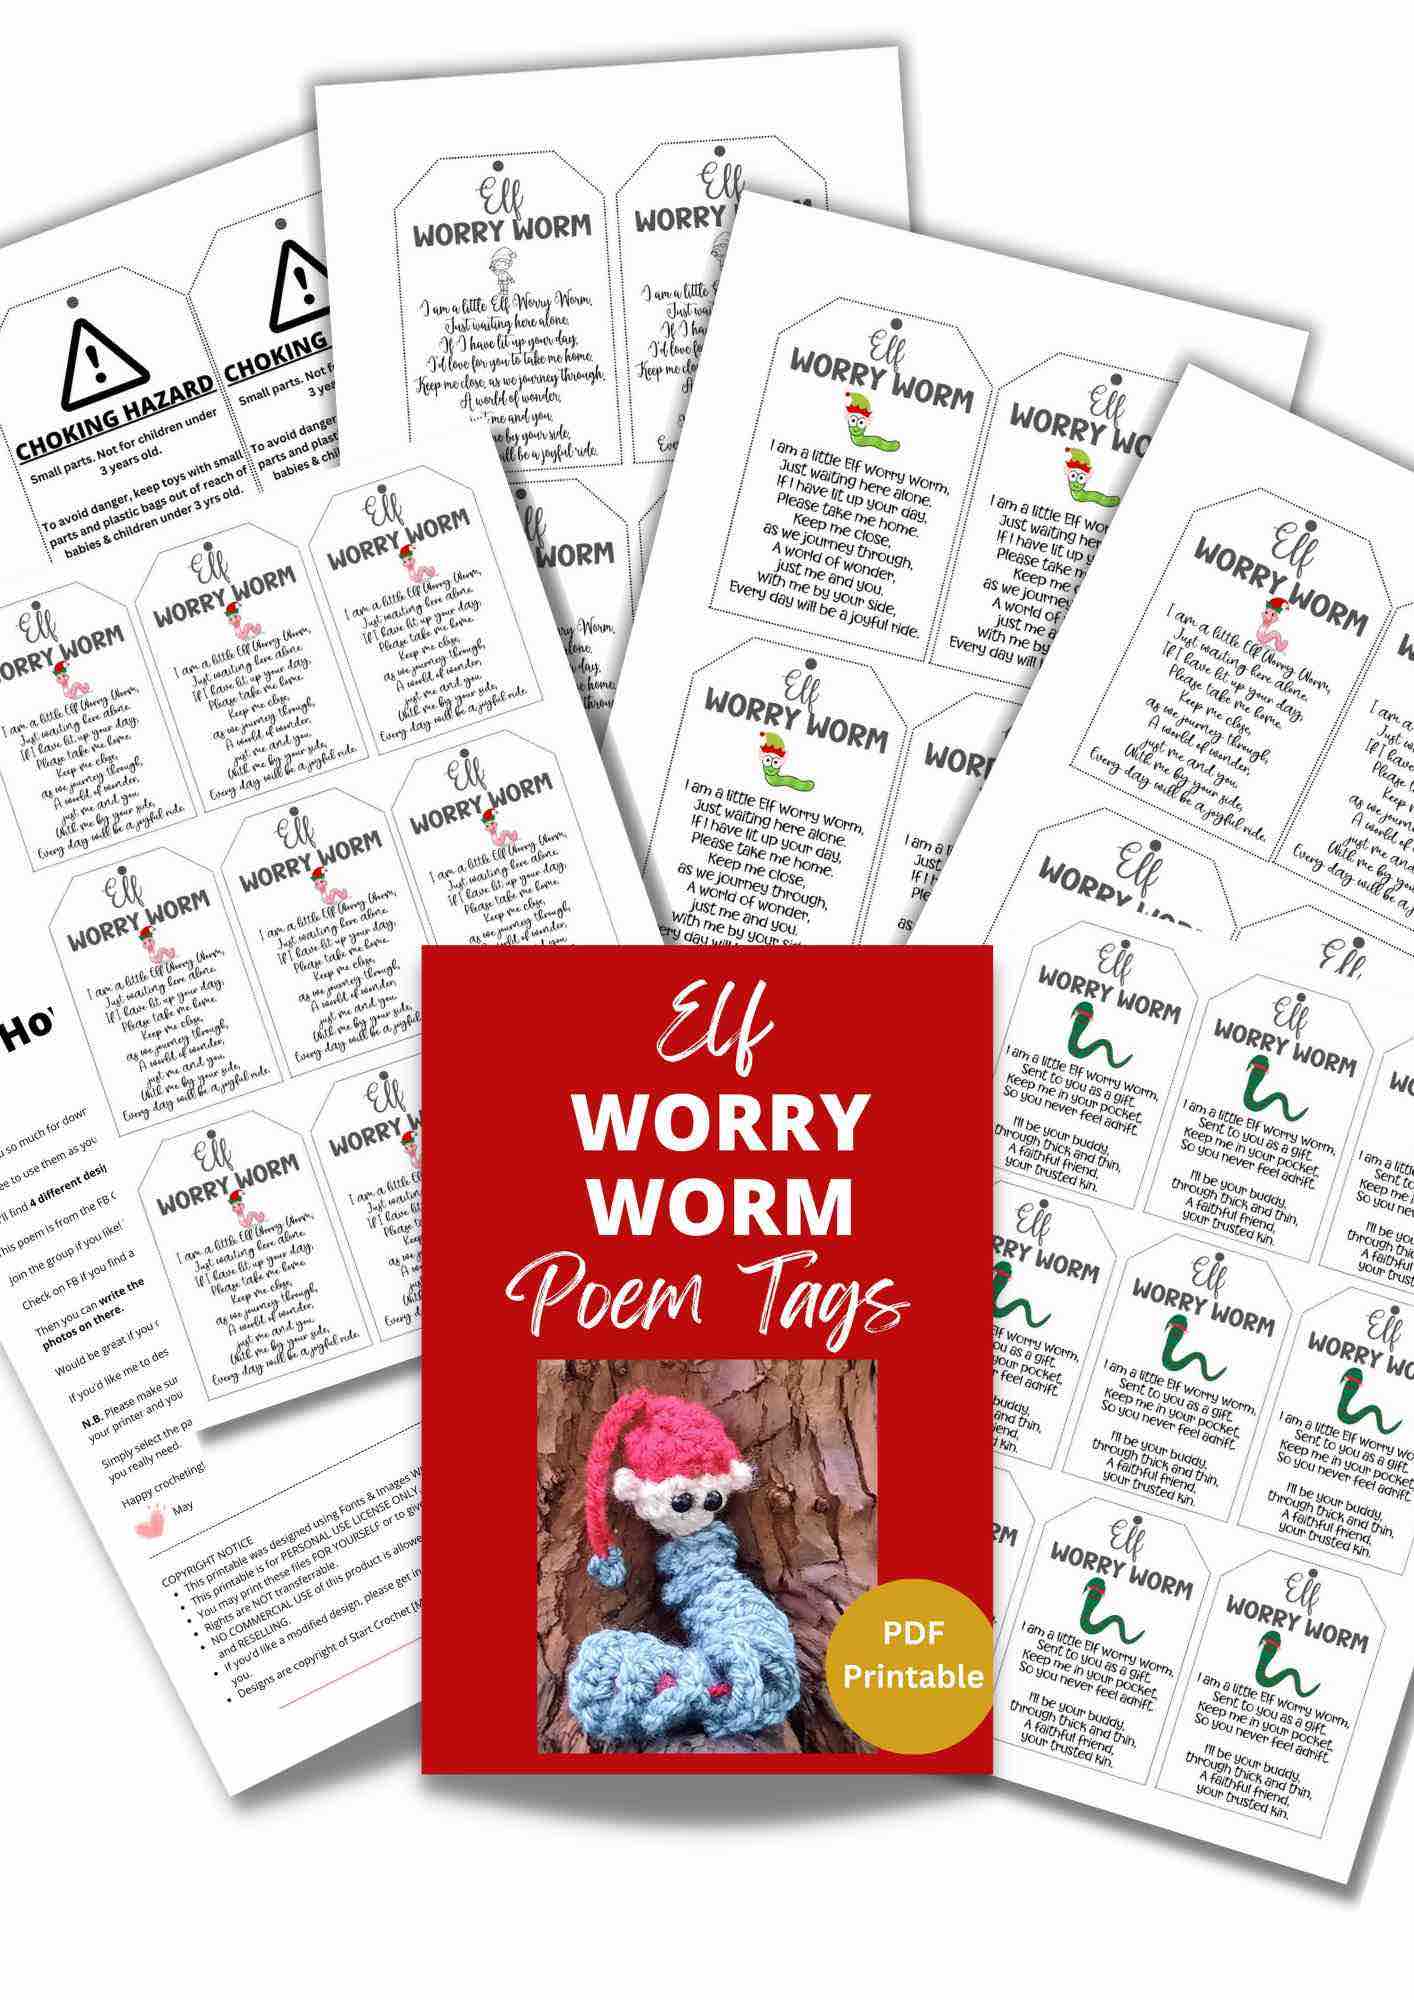 Elf Worry Worm Poem Tags PDF Printable